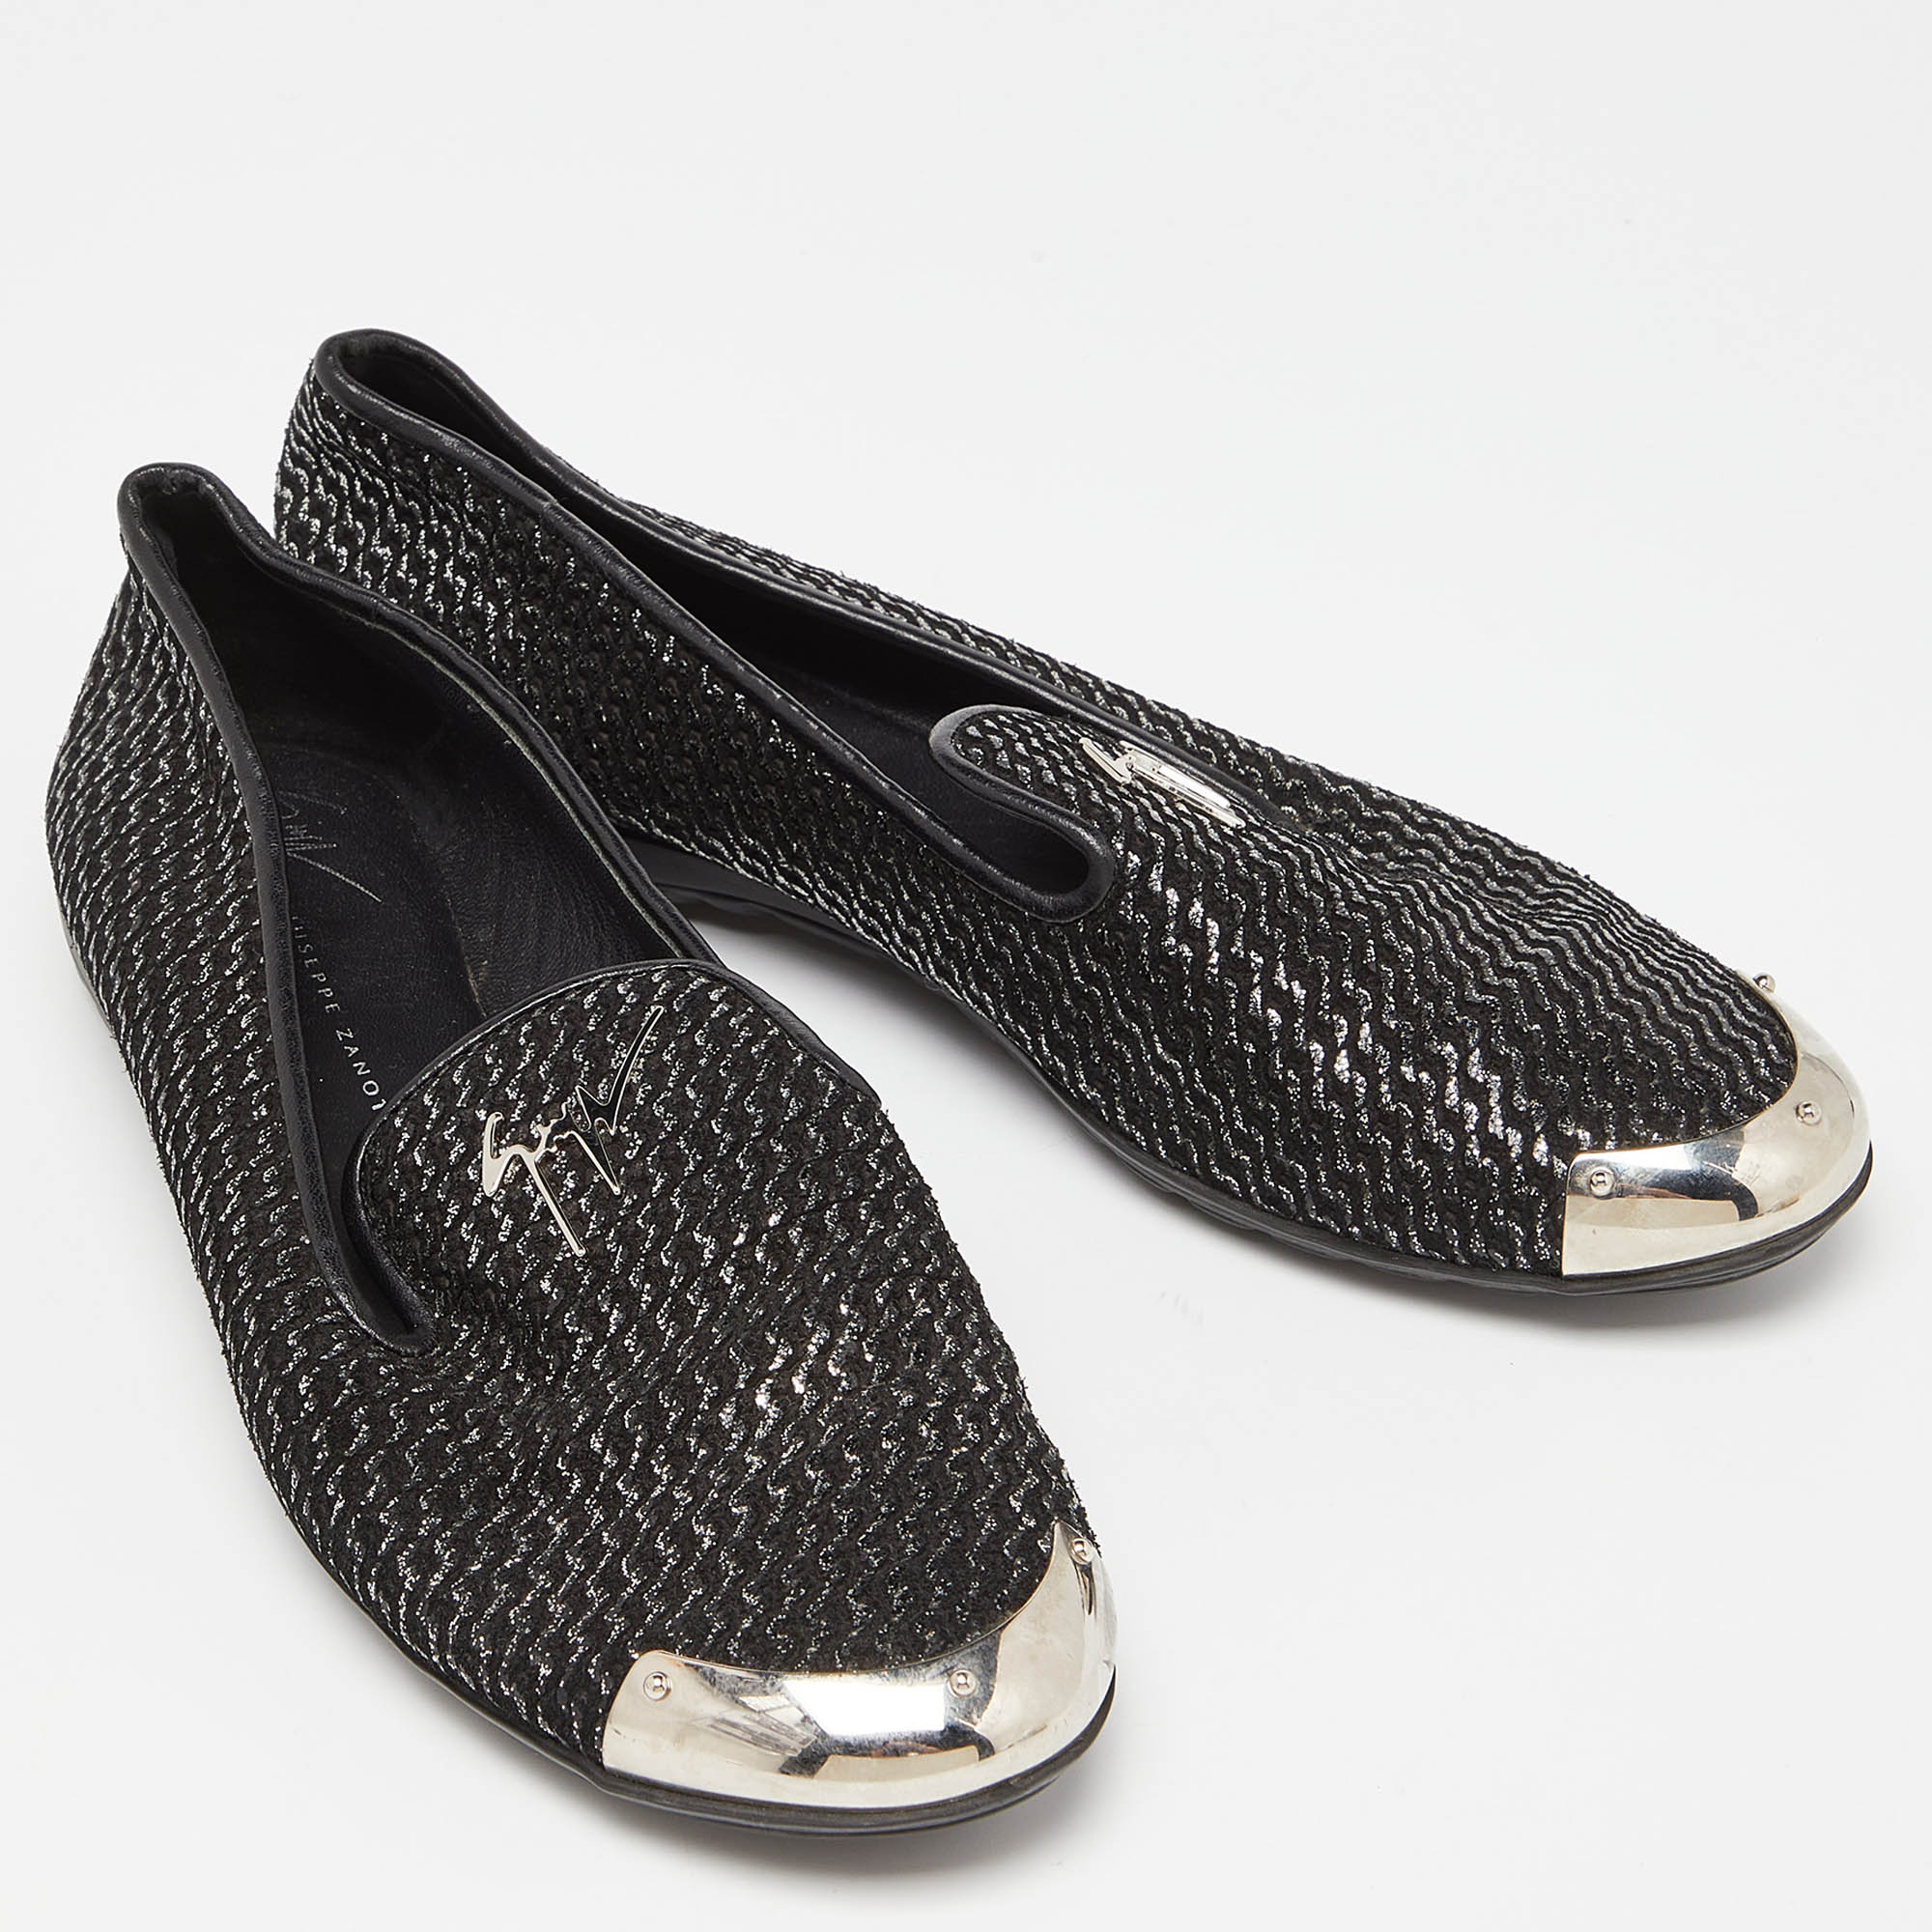 Giuseppe Zanotti Black Glitter Leather Slip On Smoking Slippers Size 37.5